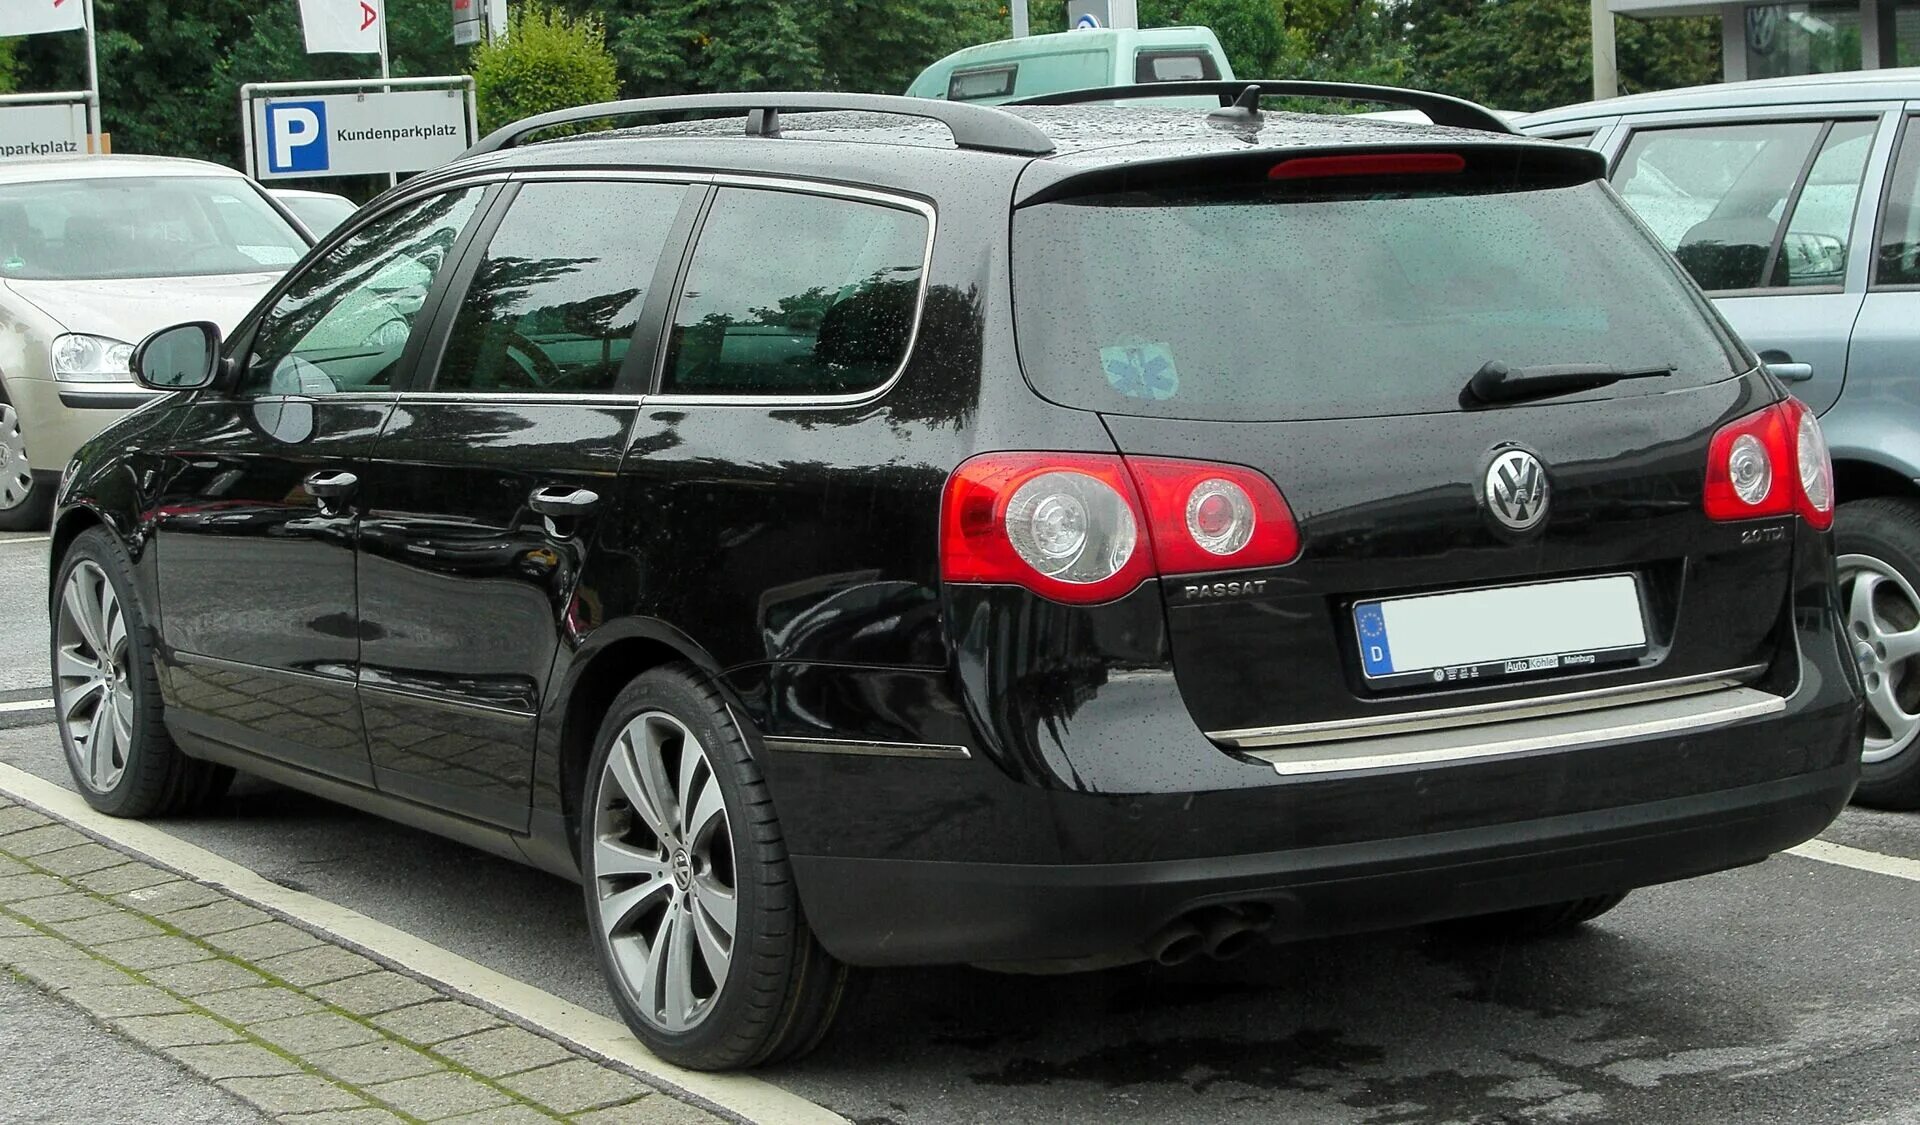 Vw b6 2.0. Volkswagen Passat b6 variant. Пассат б6 универсал. Passat b6 универсал.